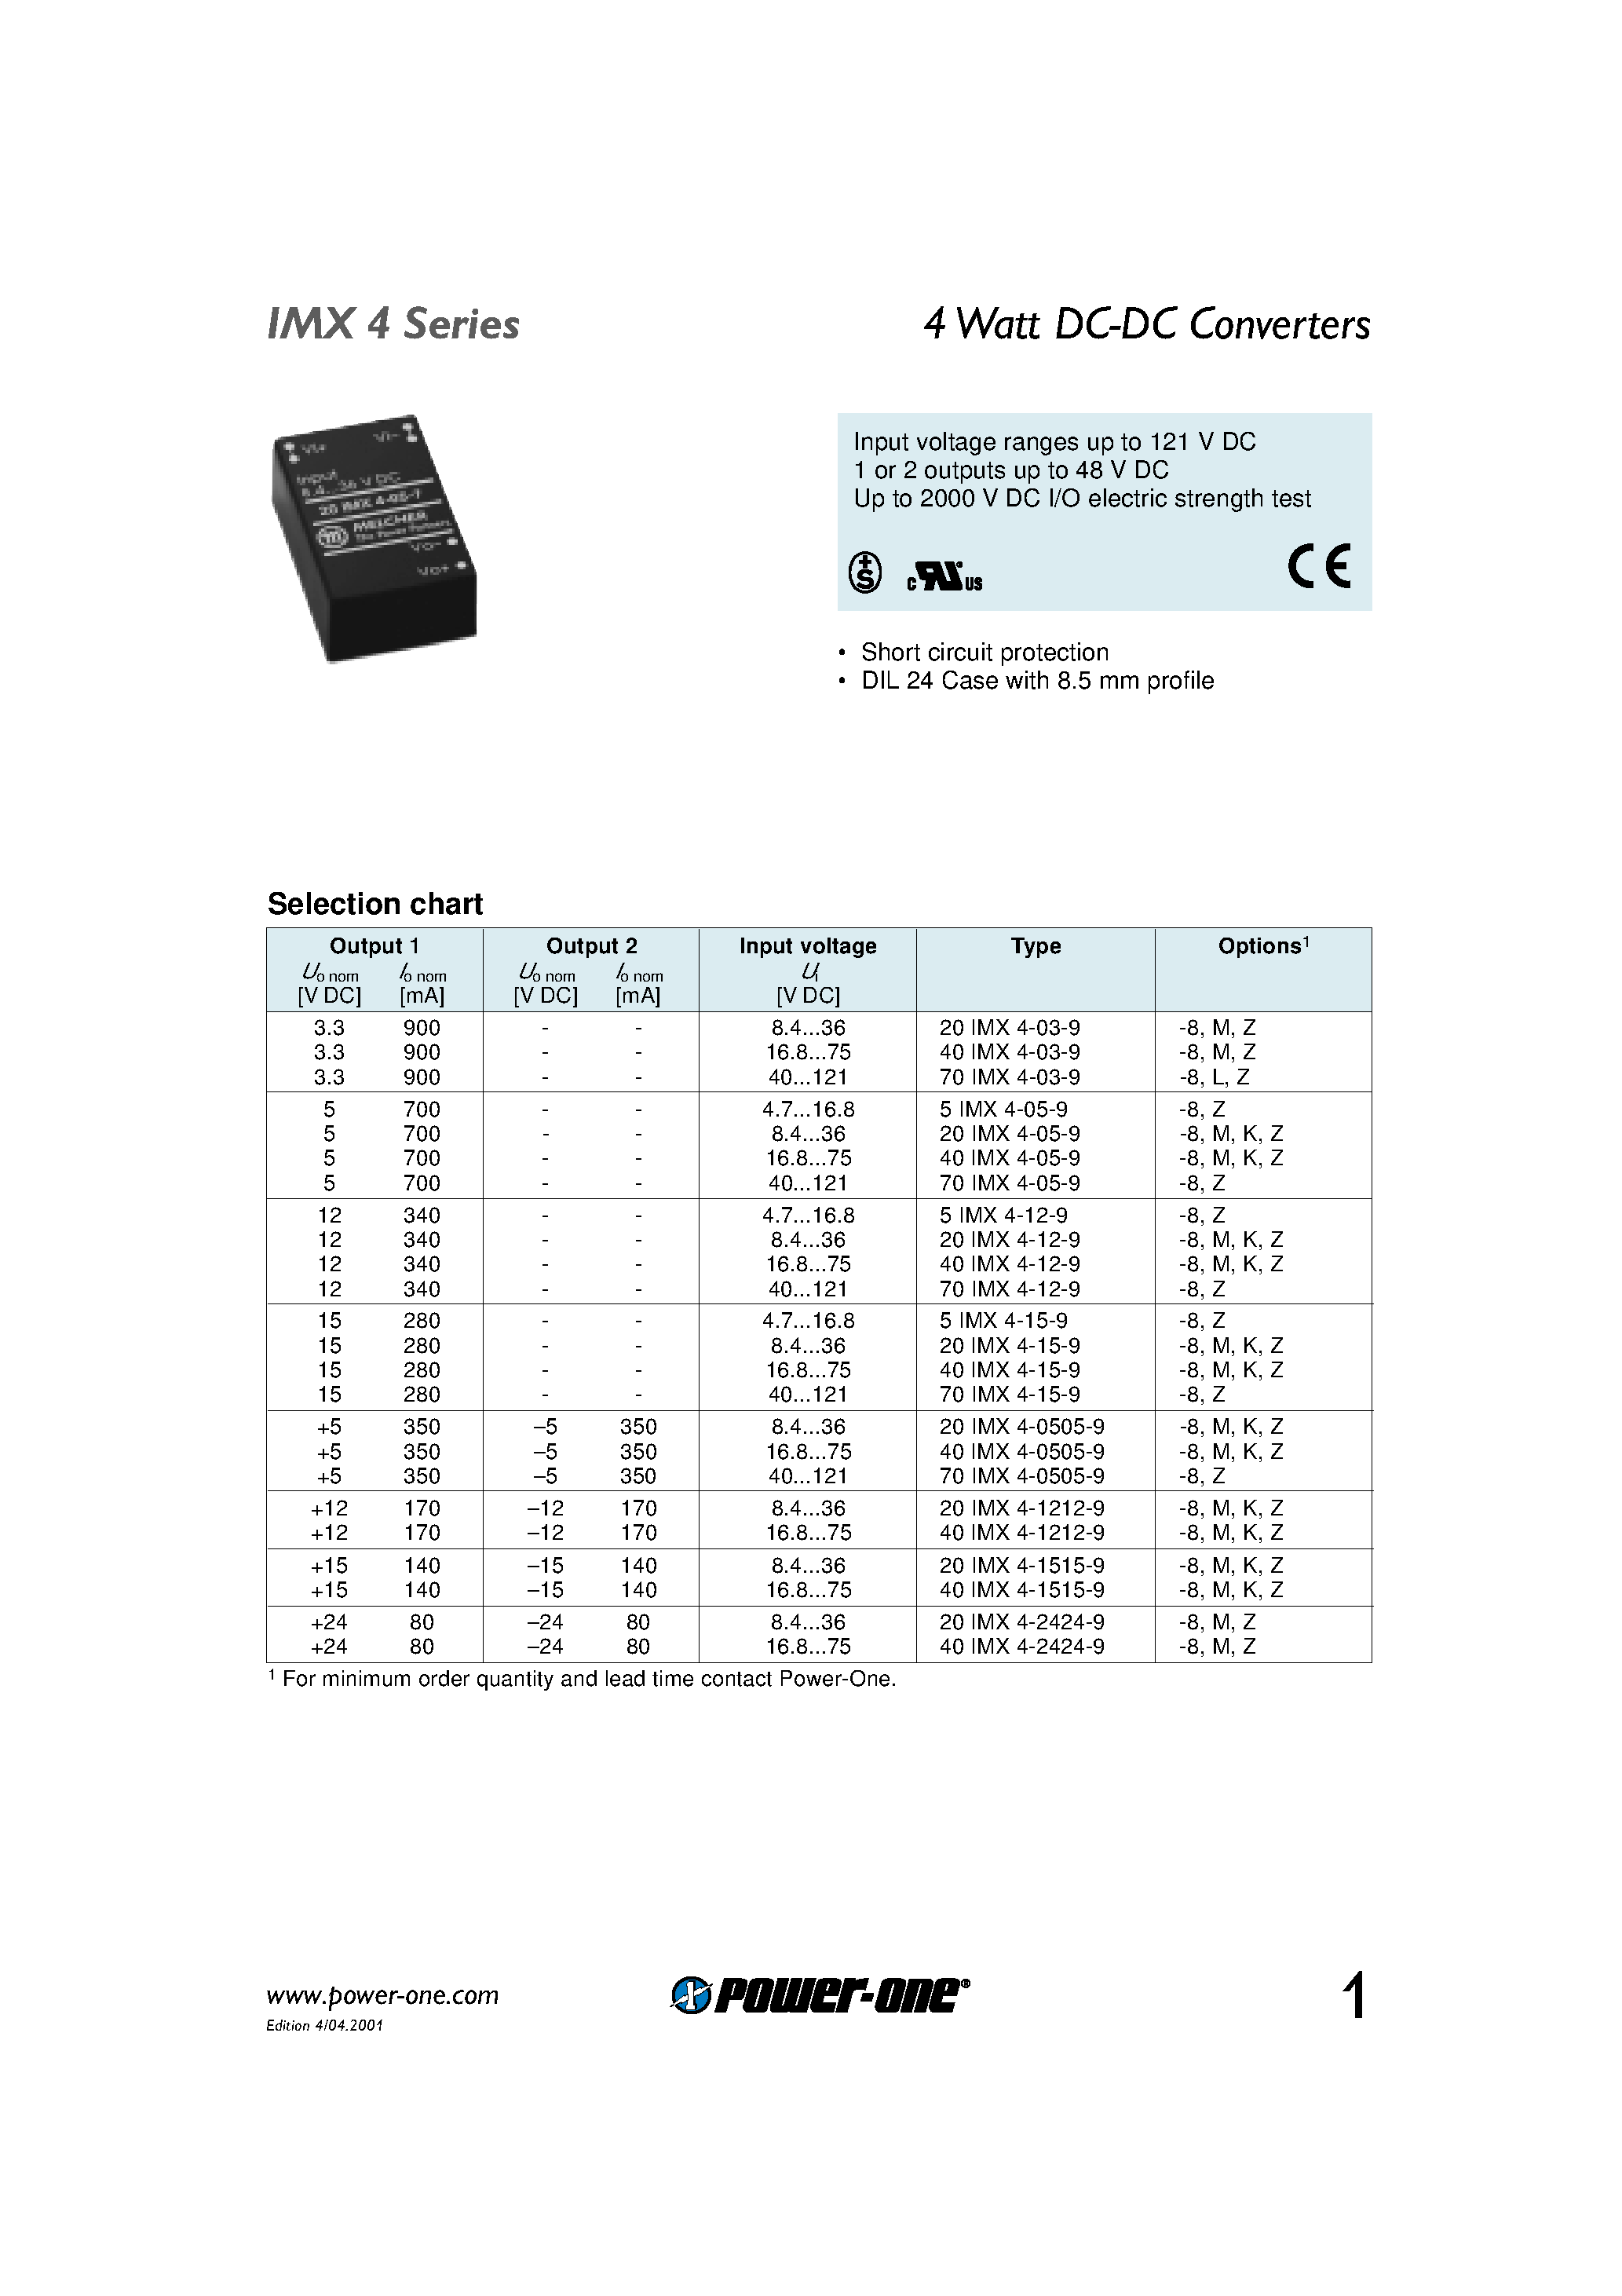 Даташит 40IMX4-0505-9 - 4 Watt DC-DC Converters страница 1